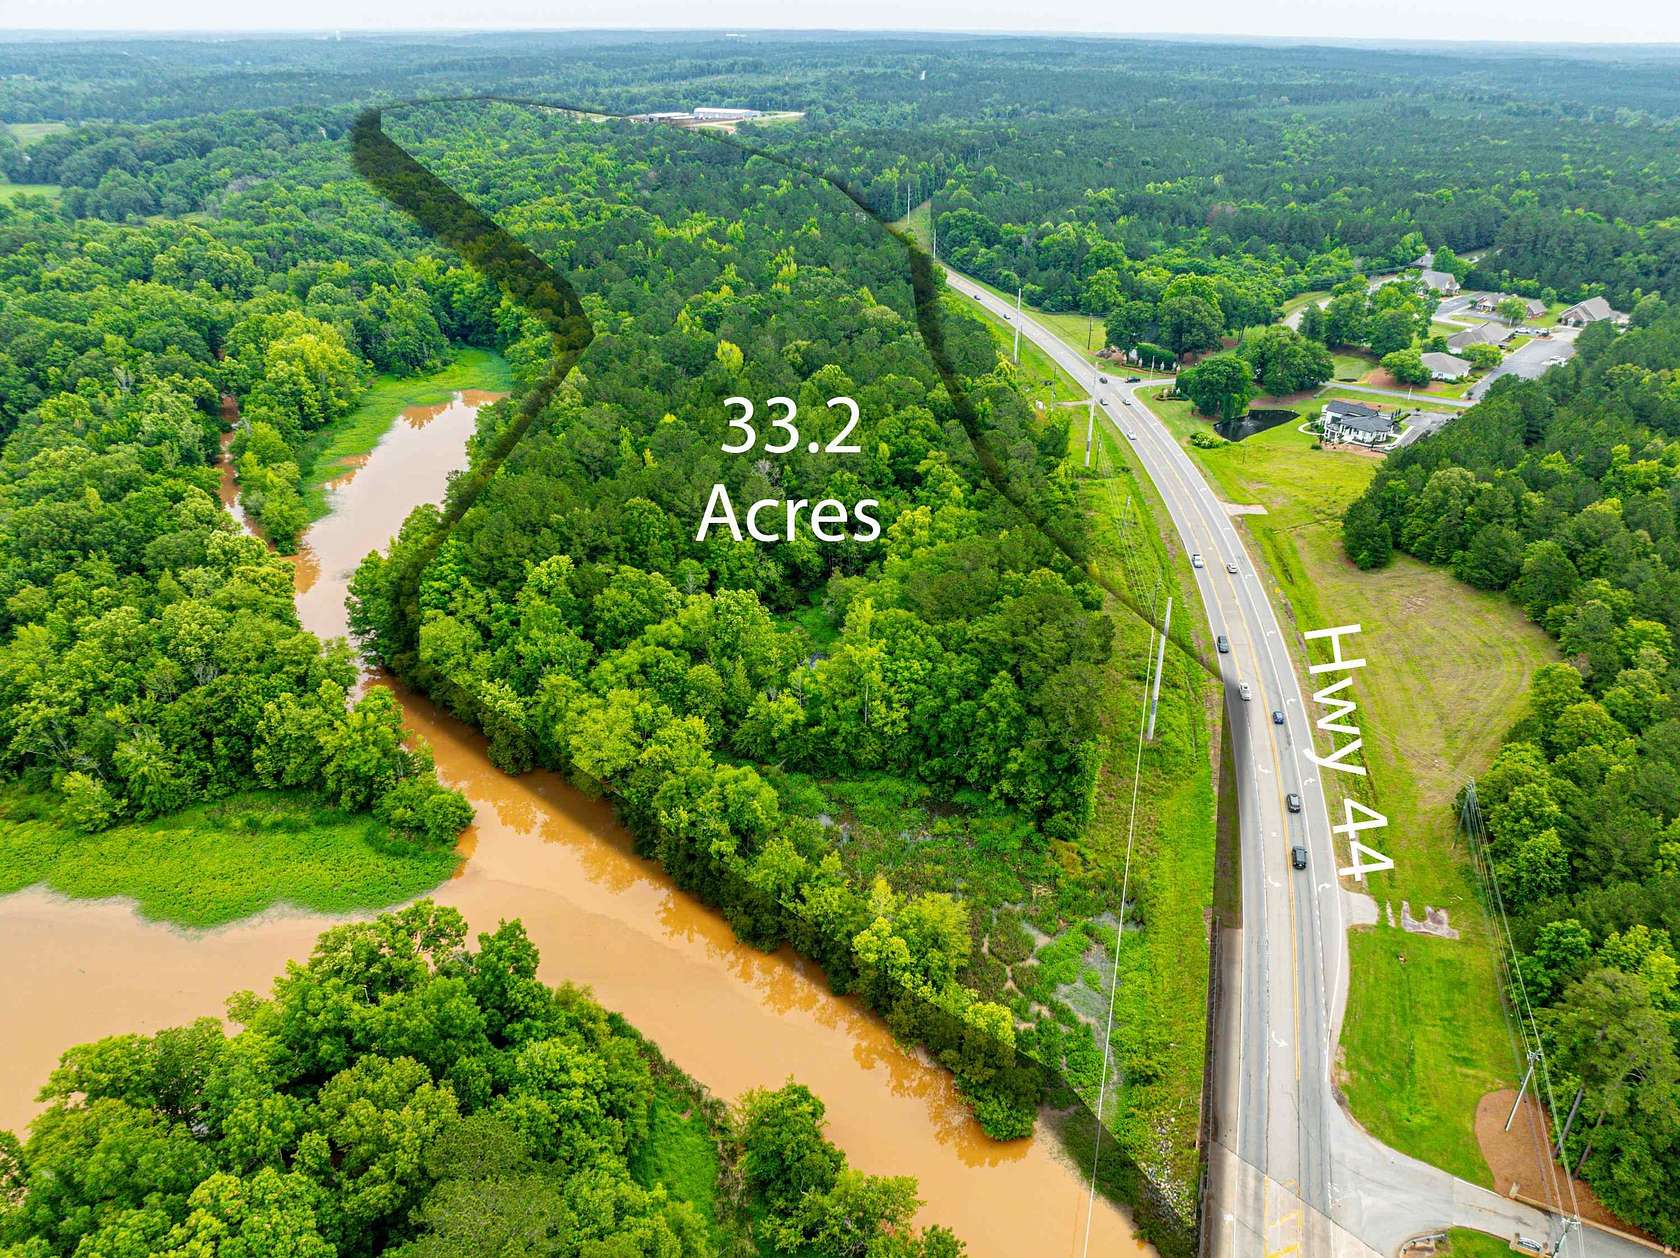 33.2 Acres of Land for Sale in Greensboro, Georgia